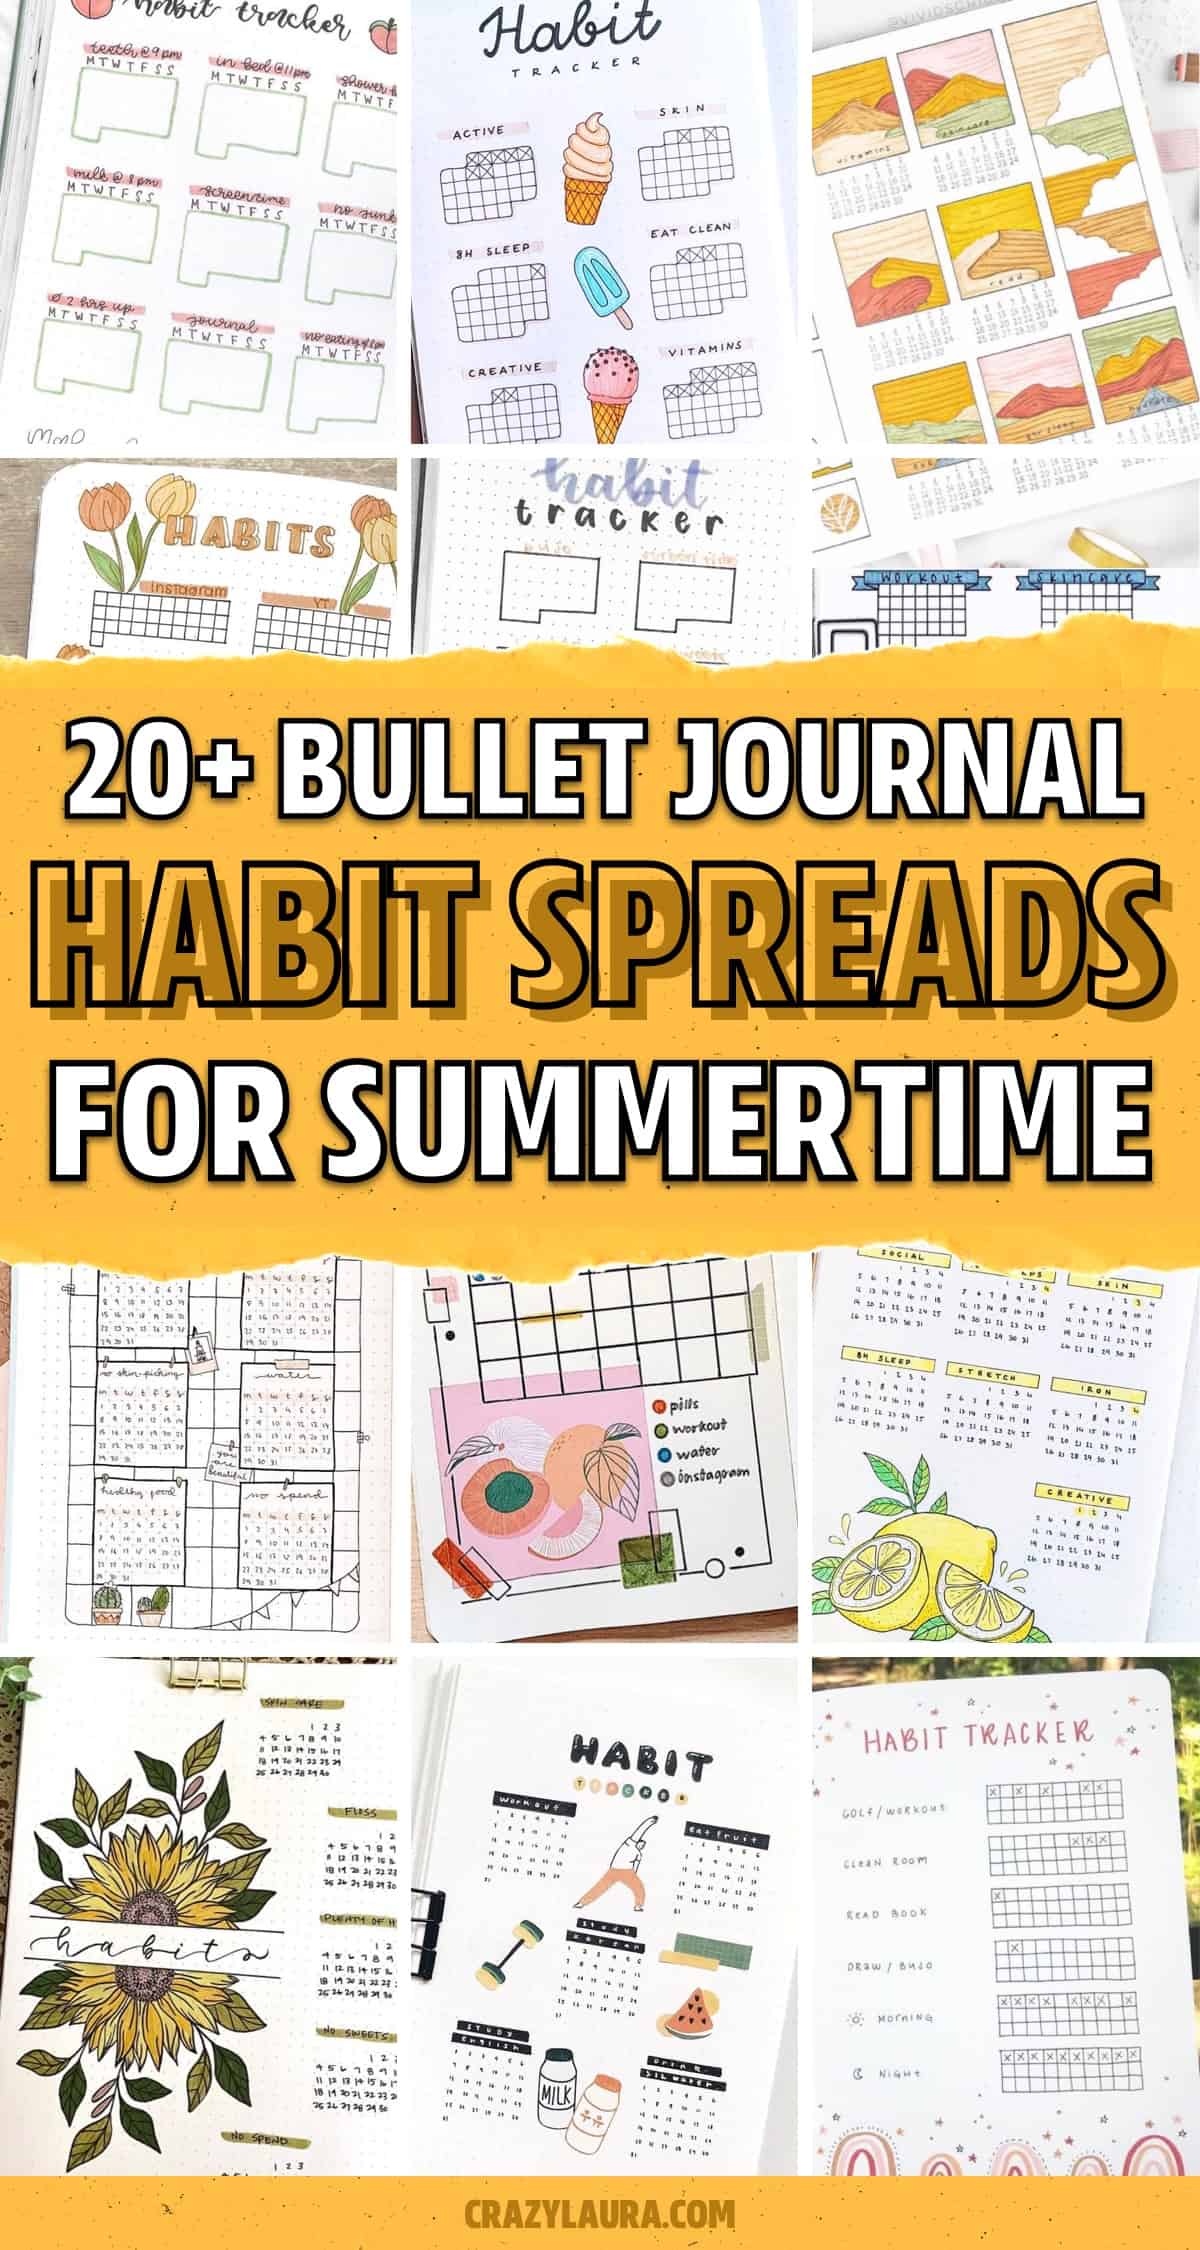 habit tracker layout inspiration for summer